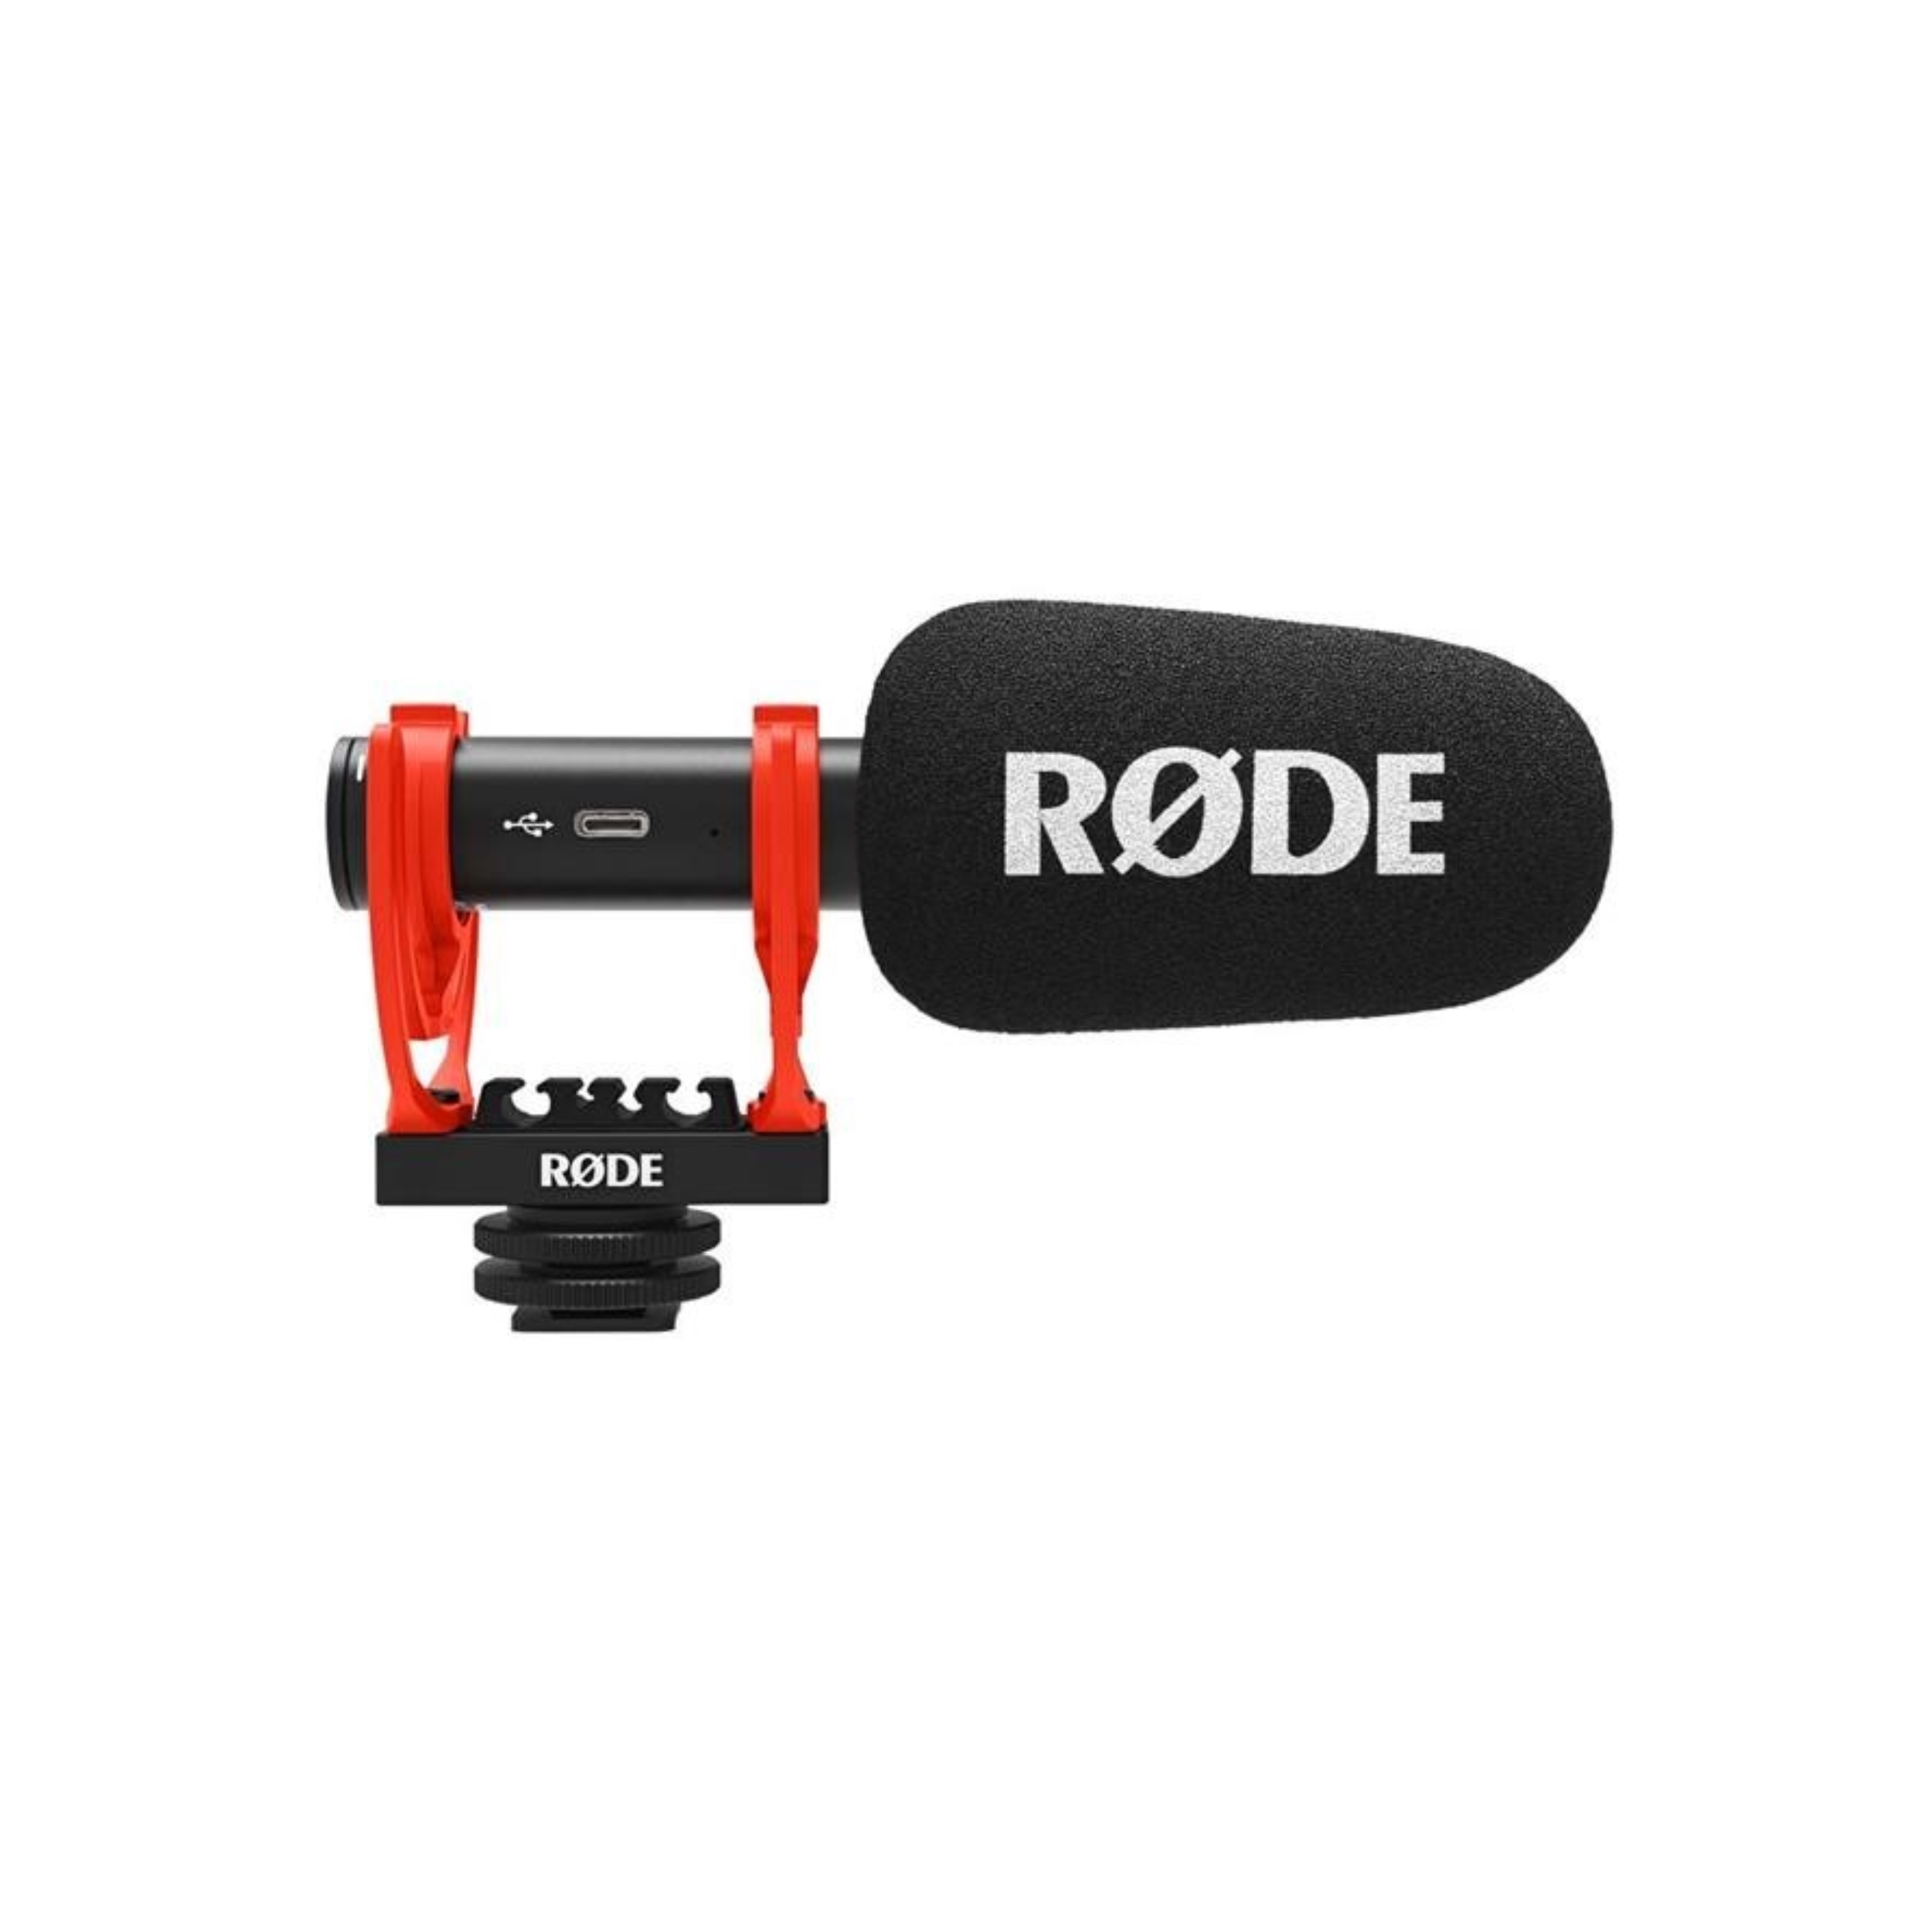 Rode Videomic Go II Microphone directionnel léger